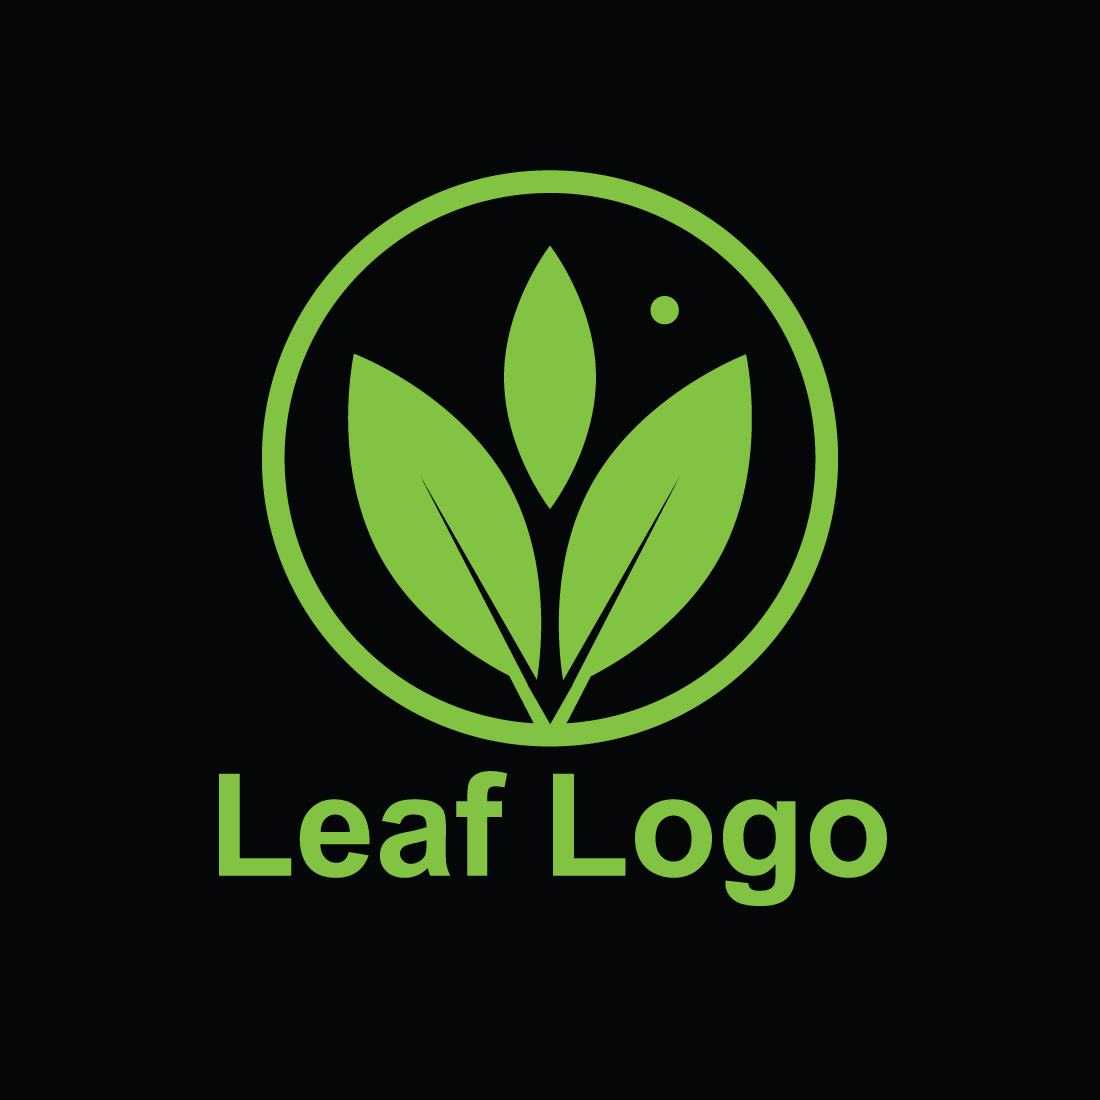 Round leaf organic gold logo Royalty Free Vector Image